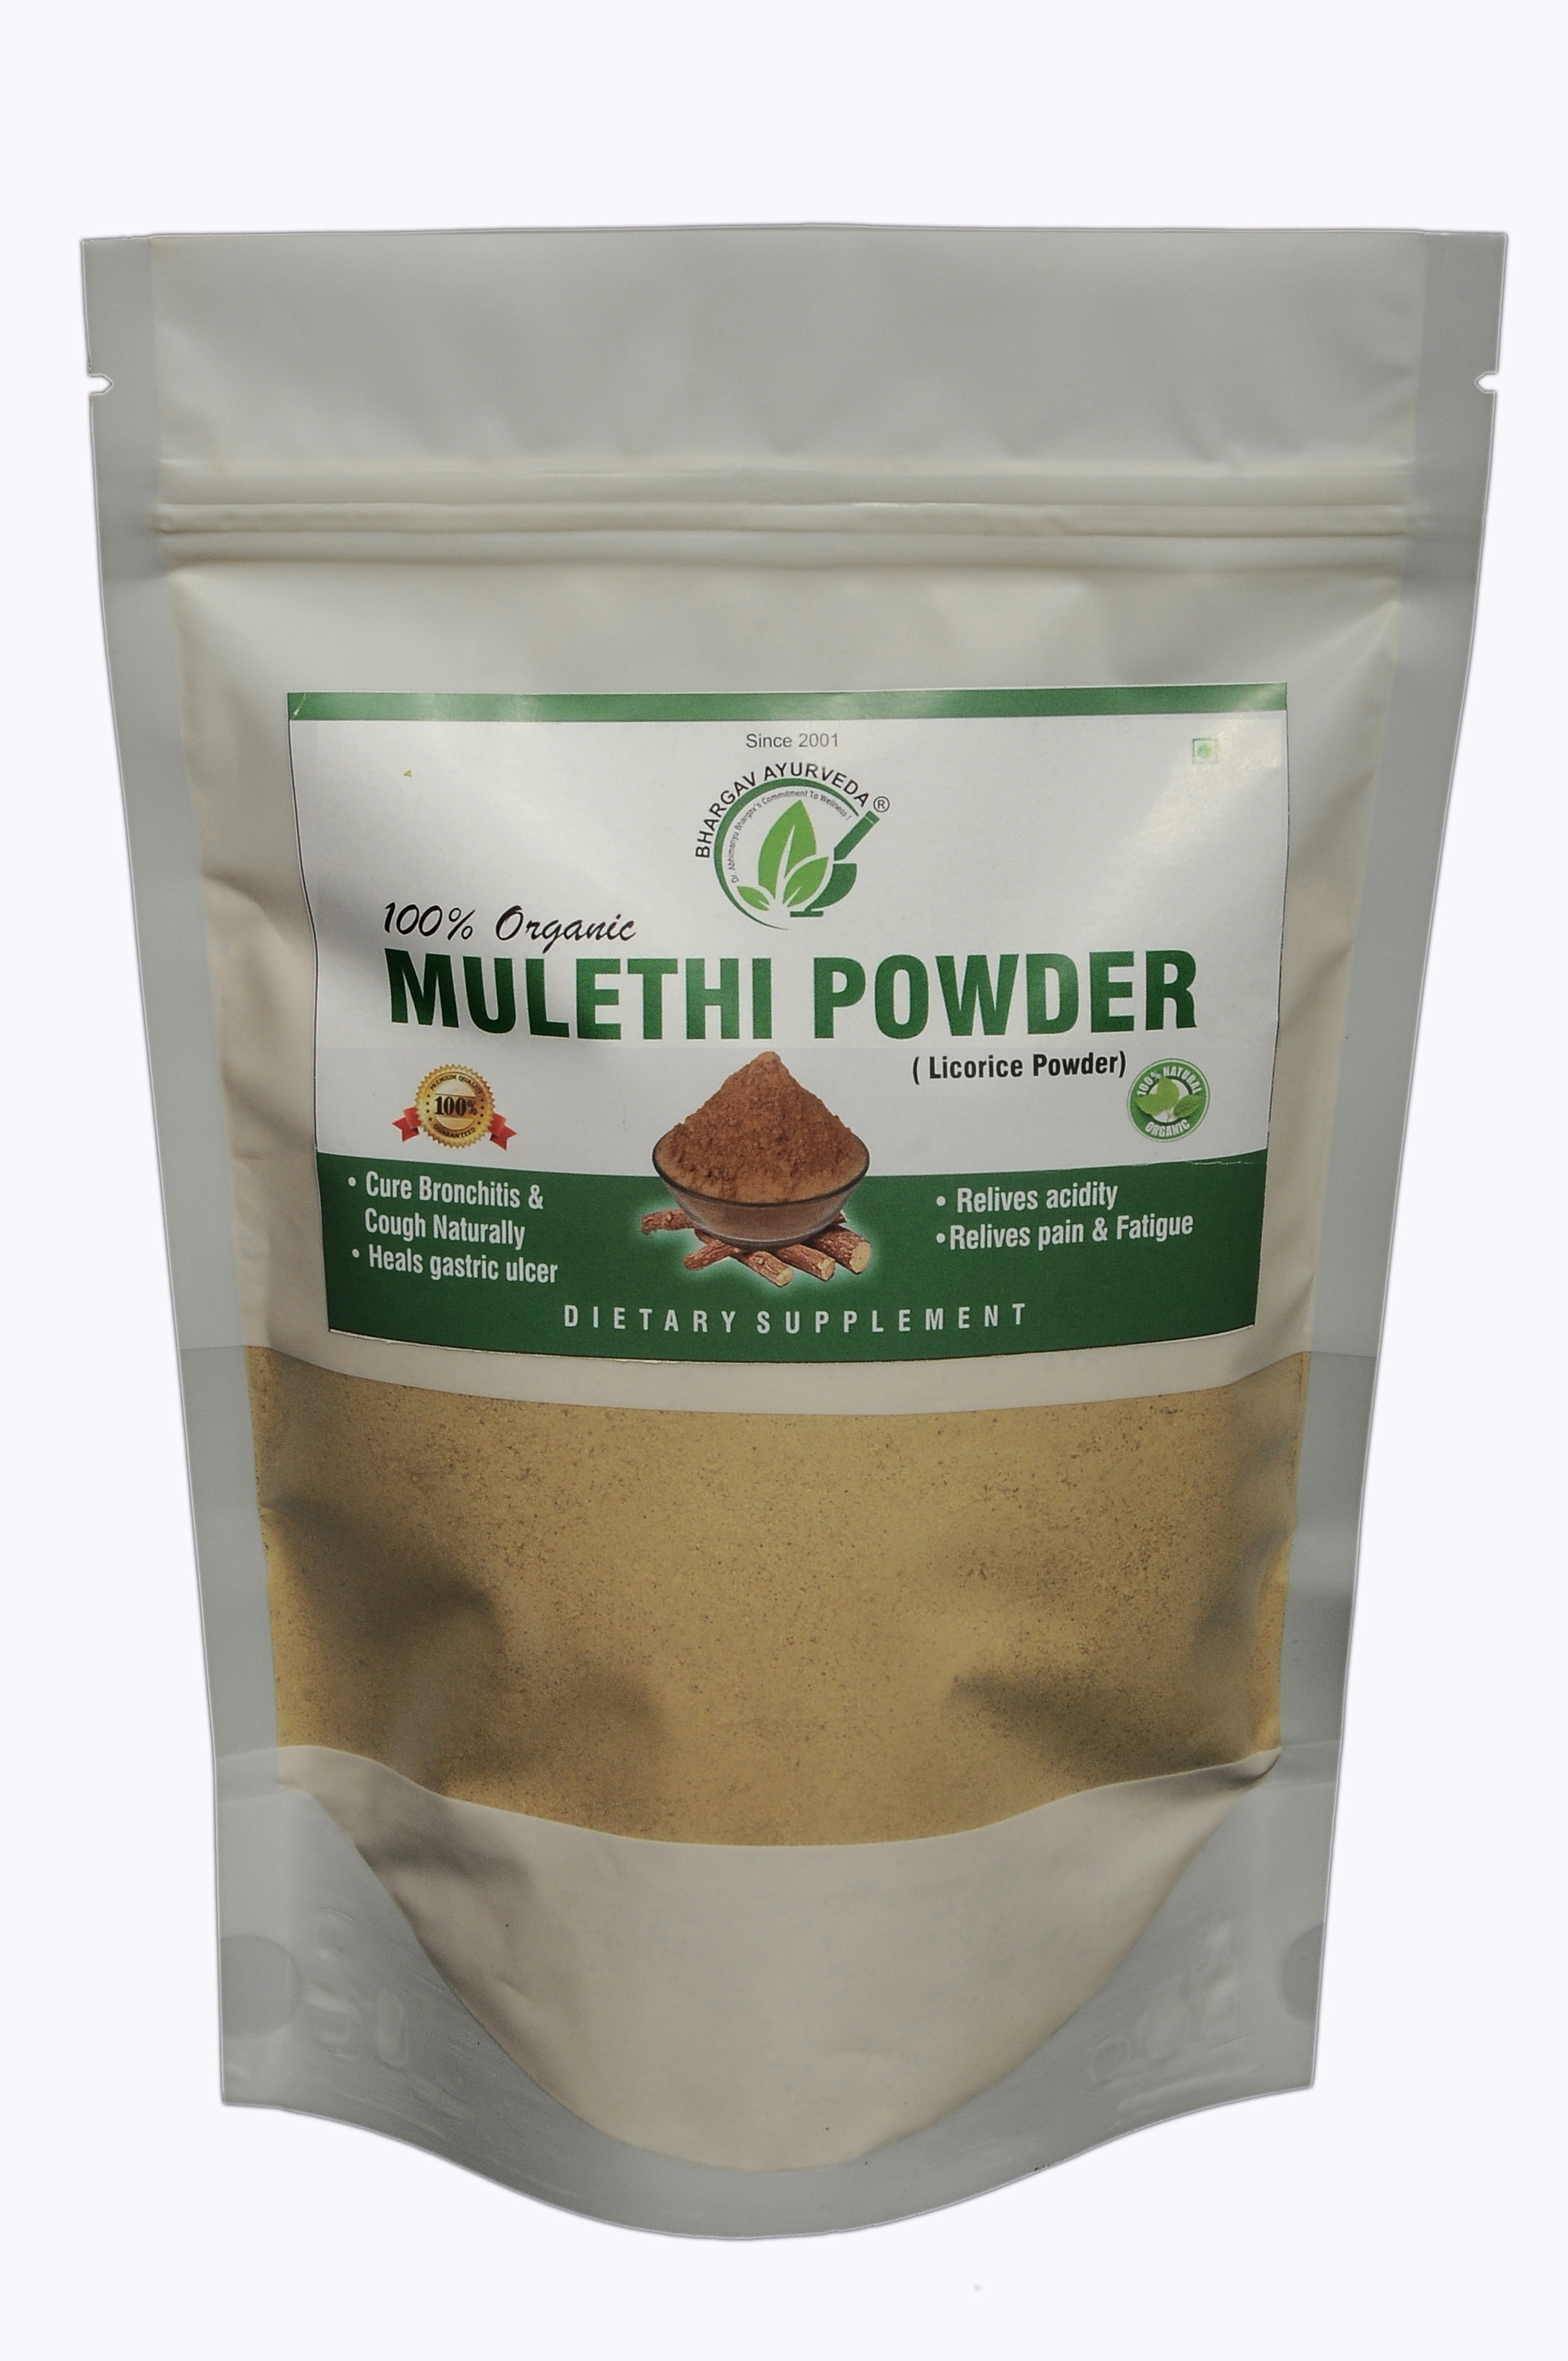 Mulethi Powder